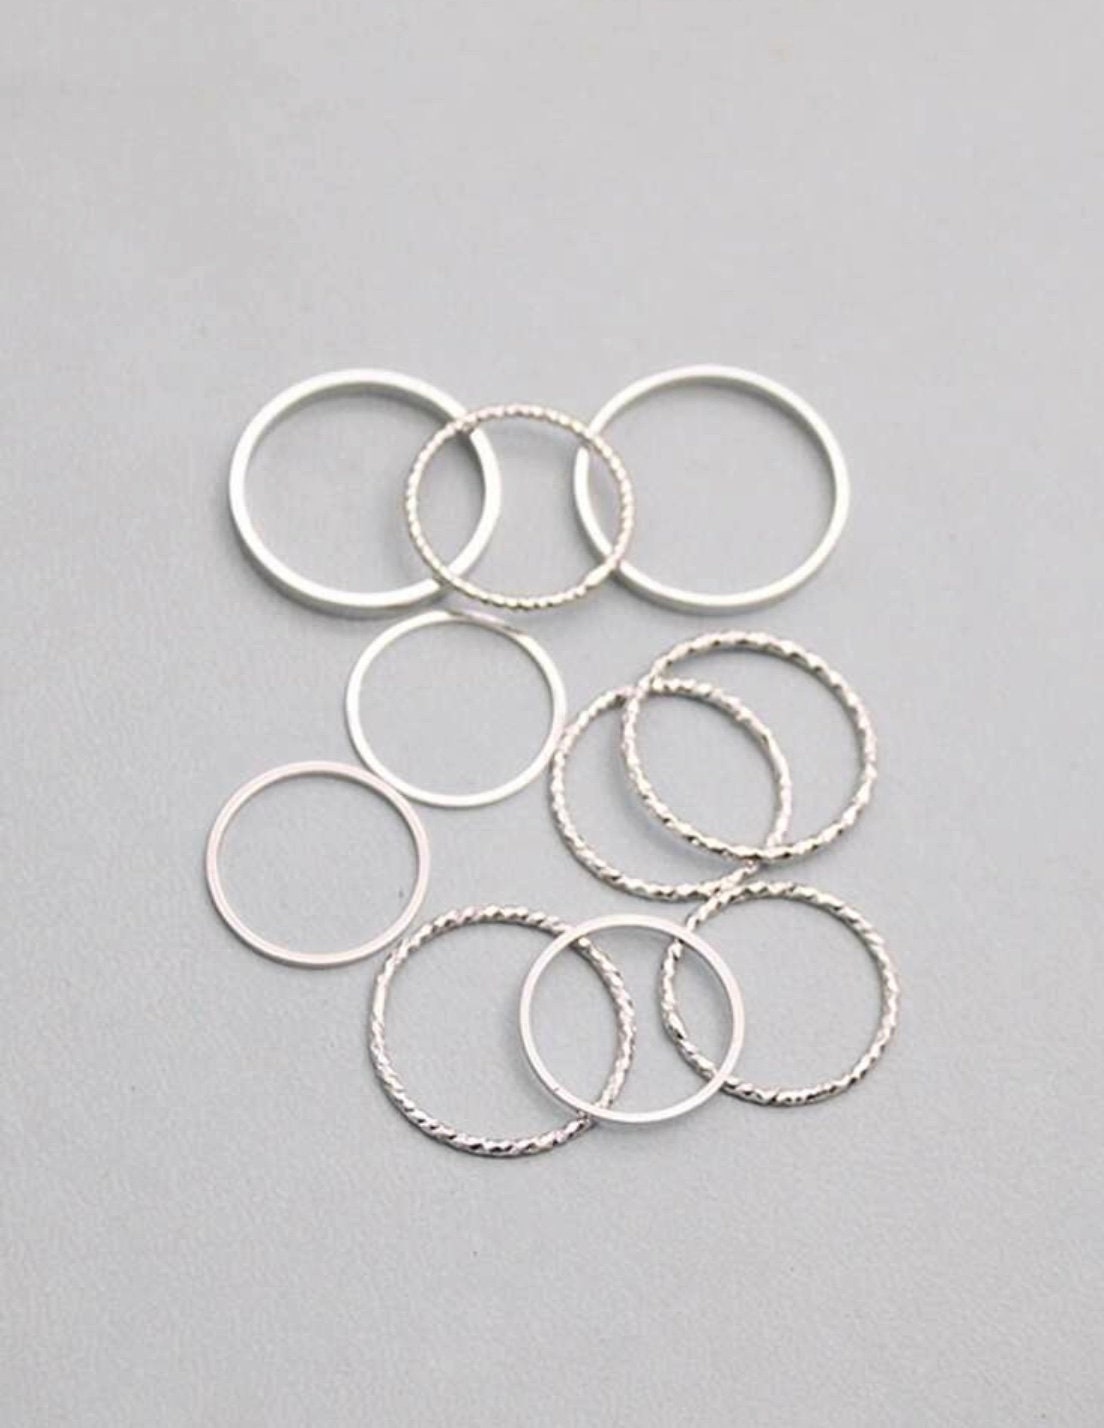 10 Piece Silver Minimalist Ring Set, Dainty Silver Ring Set, Simple Classic Silver Ring Set, Delicate Silver Ring Set, Silver Ring Stack